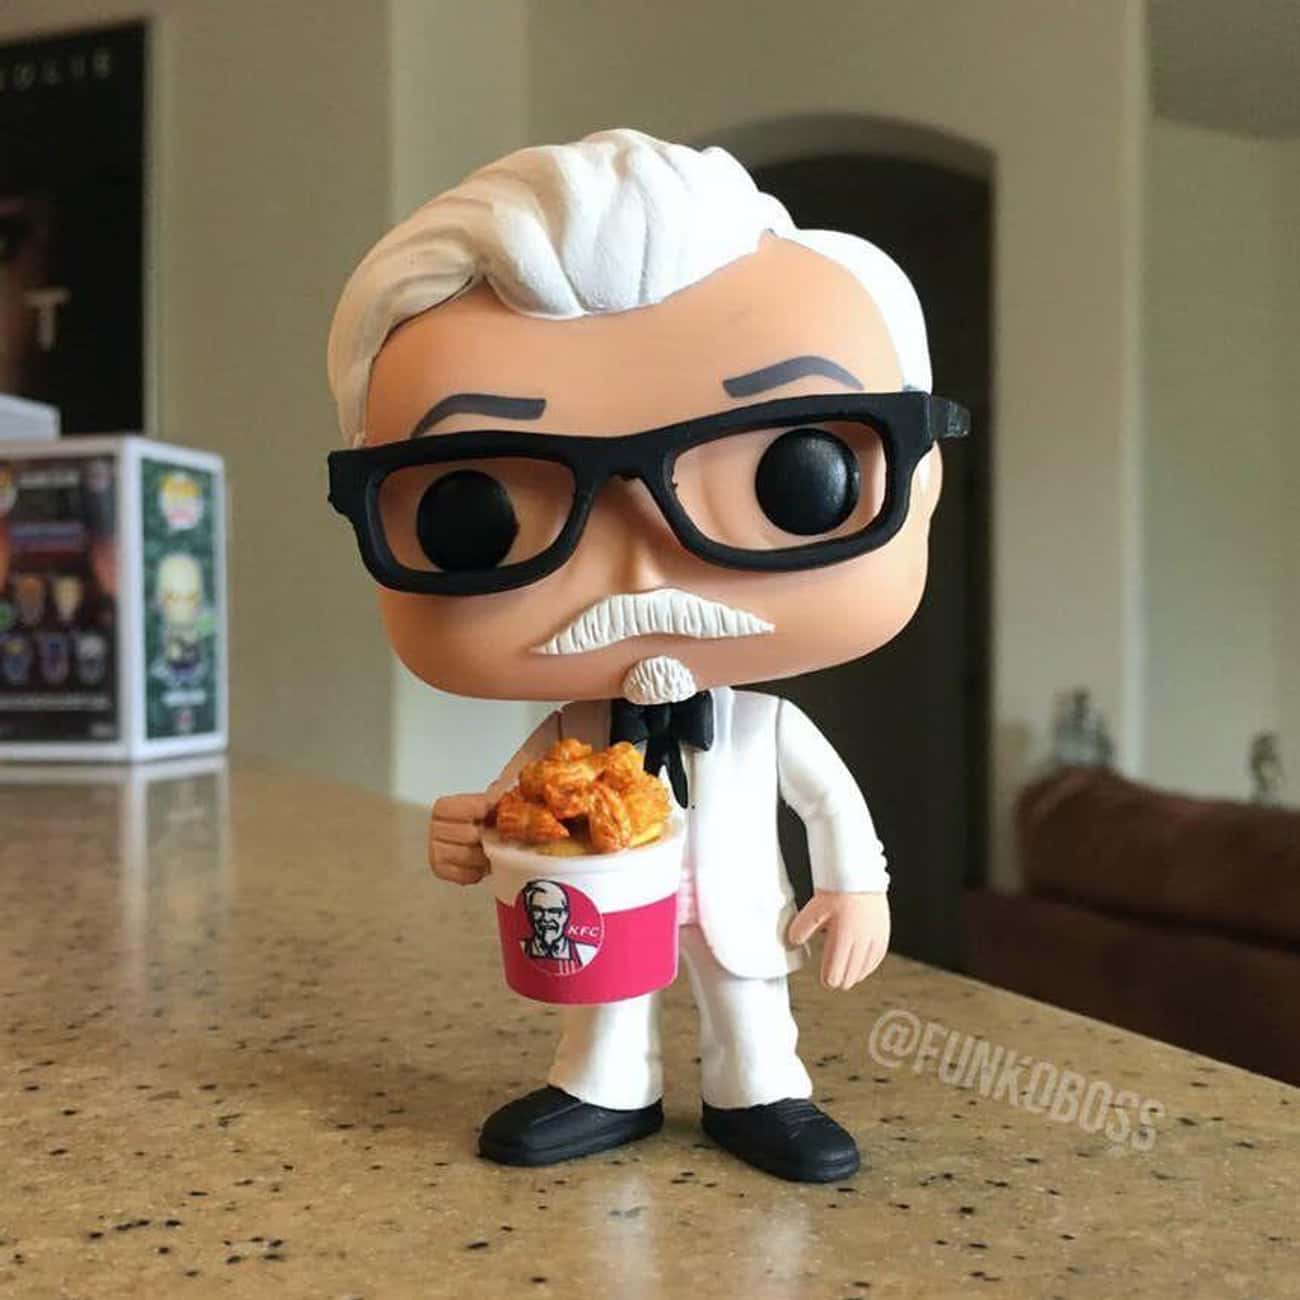 The Colonel Sanders Figure Your KFC-Loving Heart Needed